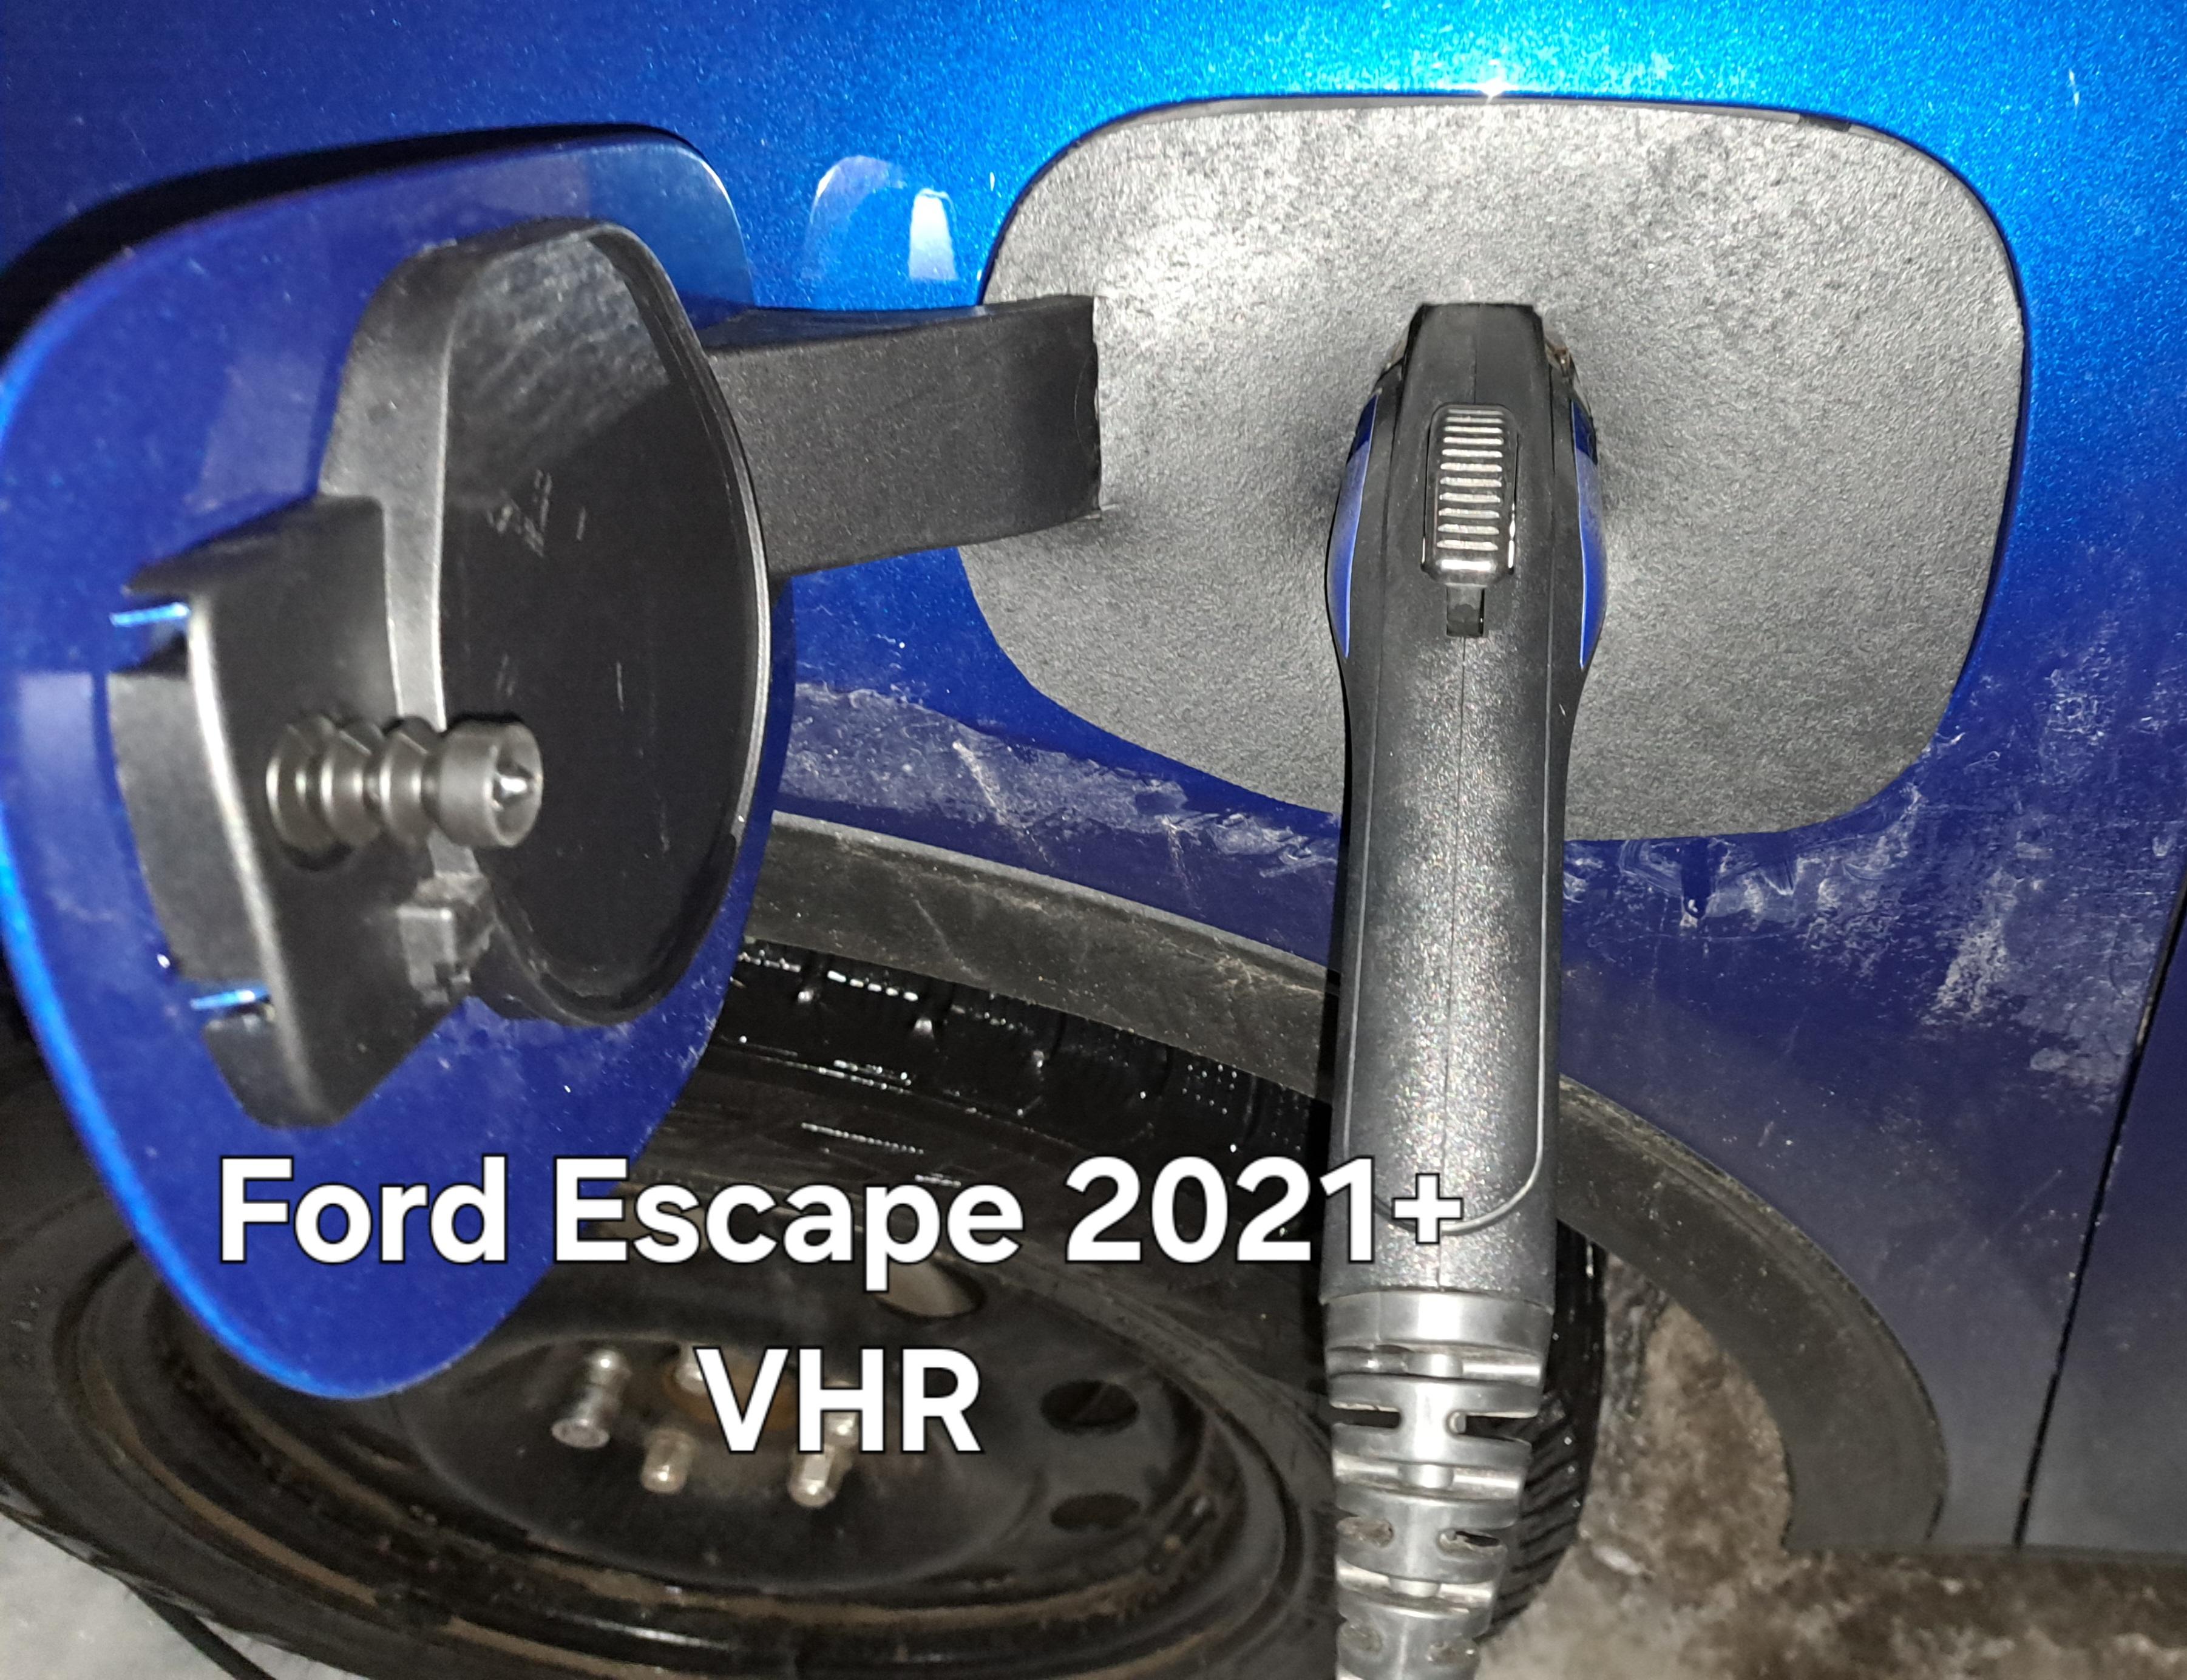 Ford Escape 2021+ VHR